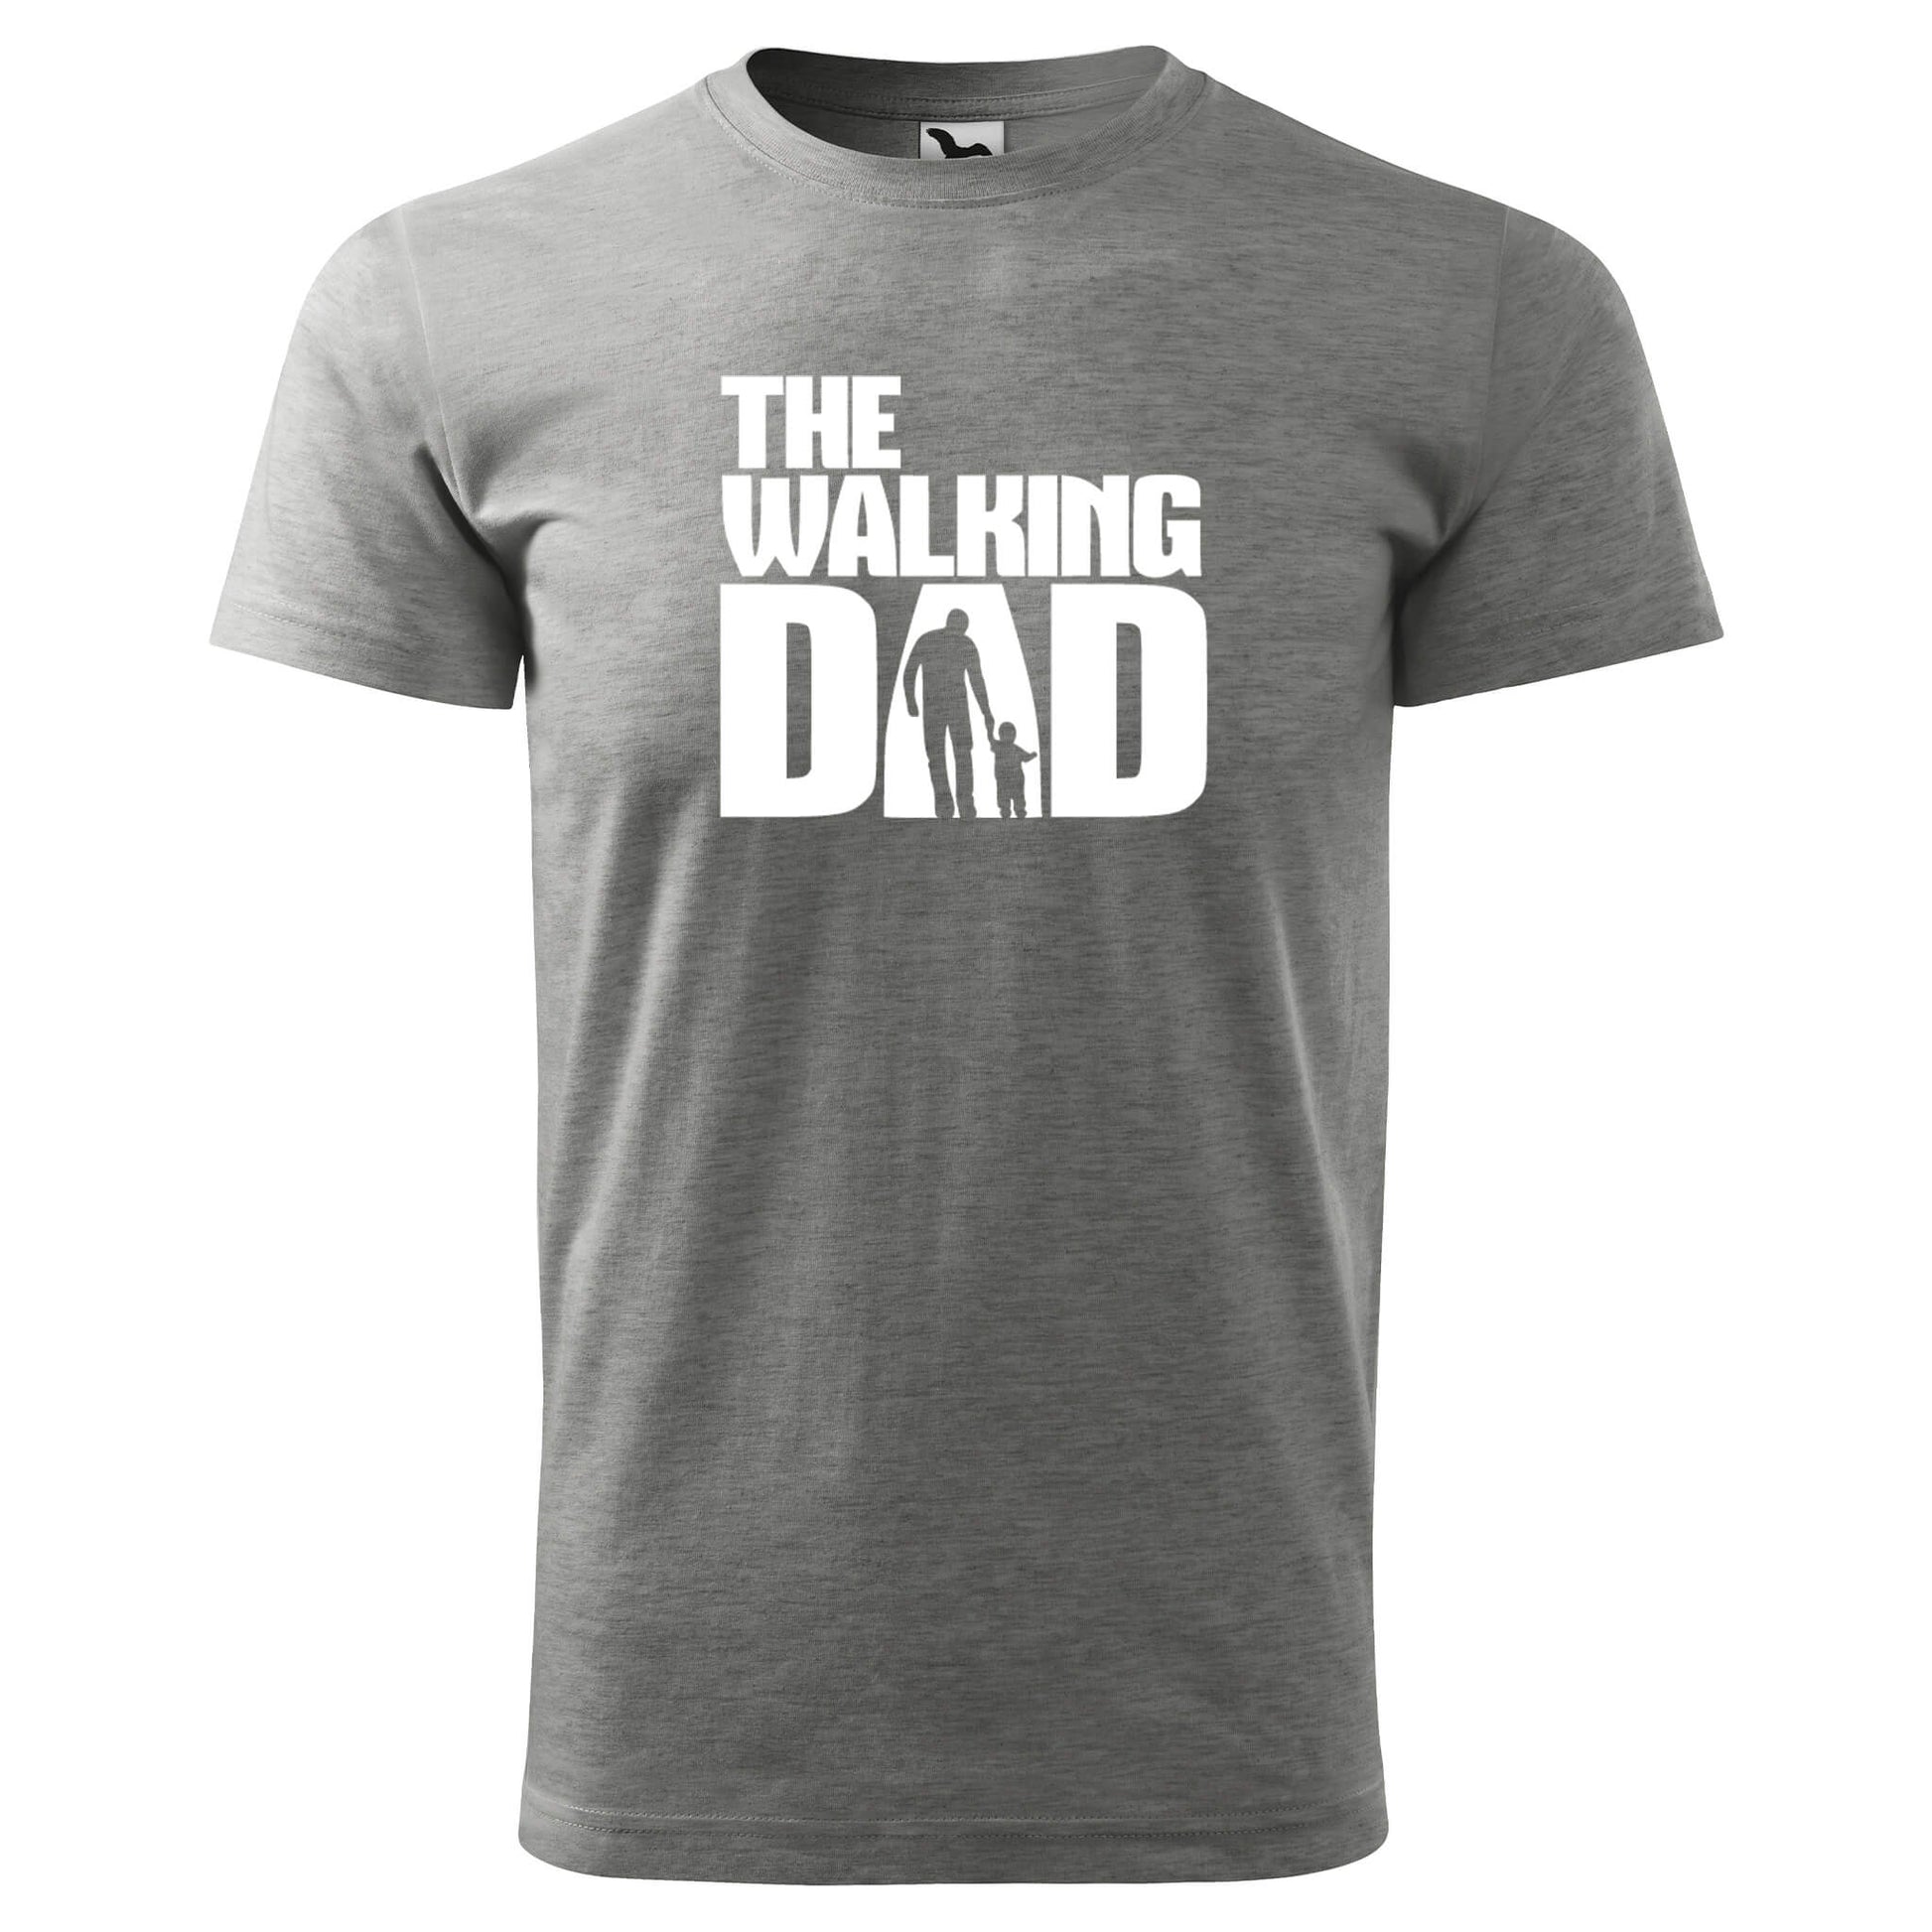 T-shirt - The walking dad - rvdesignprint